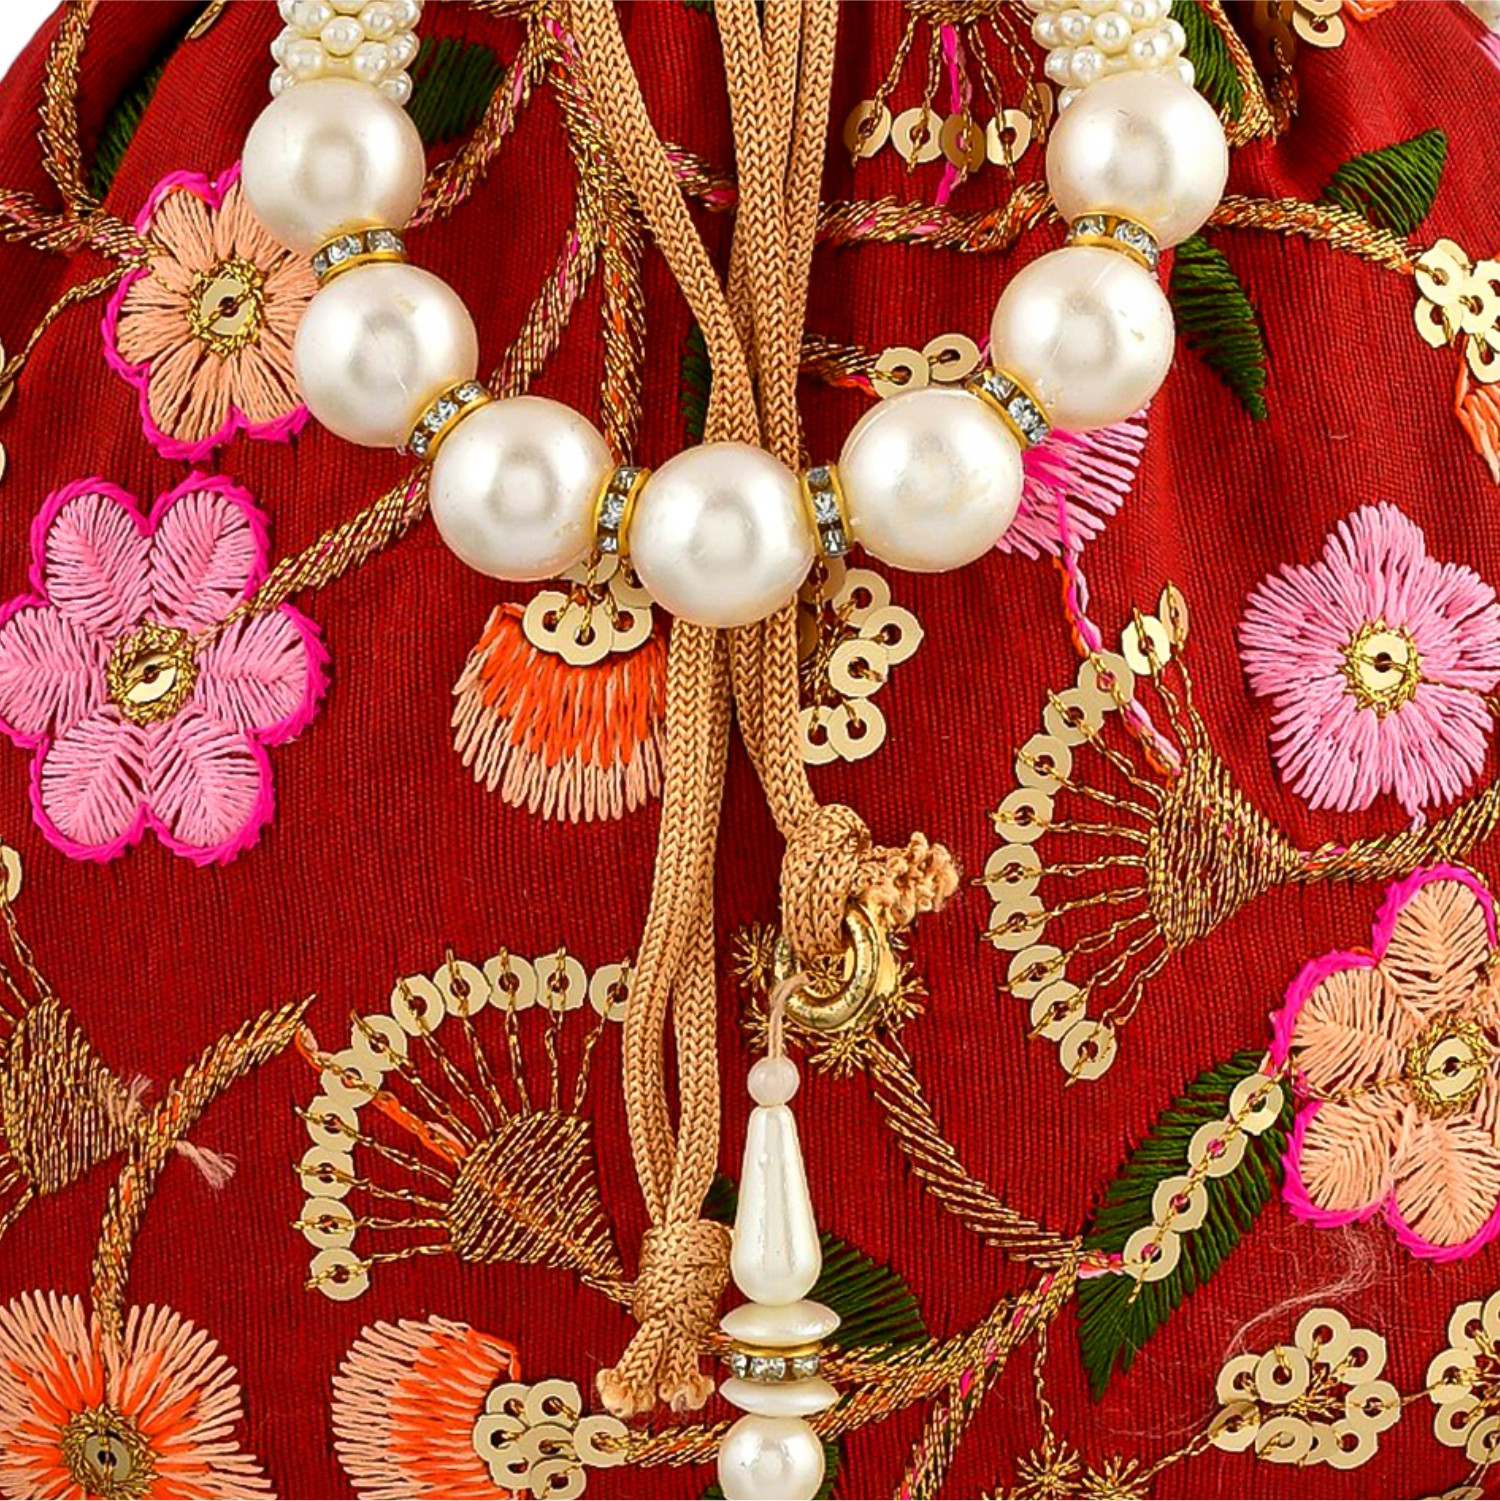 Kuber Industries Potli | Silk Wedding Potli | Christmas Gift Potli | Baby Shower Potli | Traditional Shagun Potli | Drawstring with Beads Handle Potli | New Flower Embroidery Potli | Pack of 3 | Multi